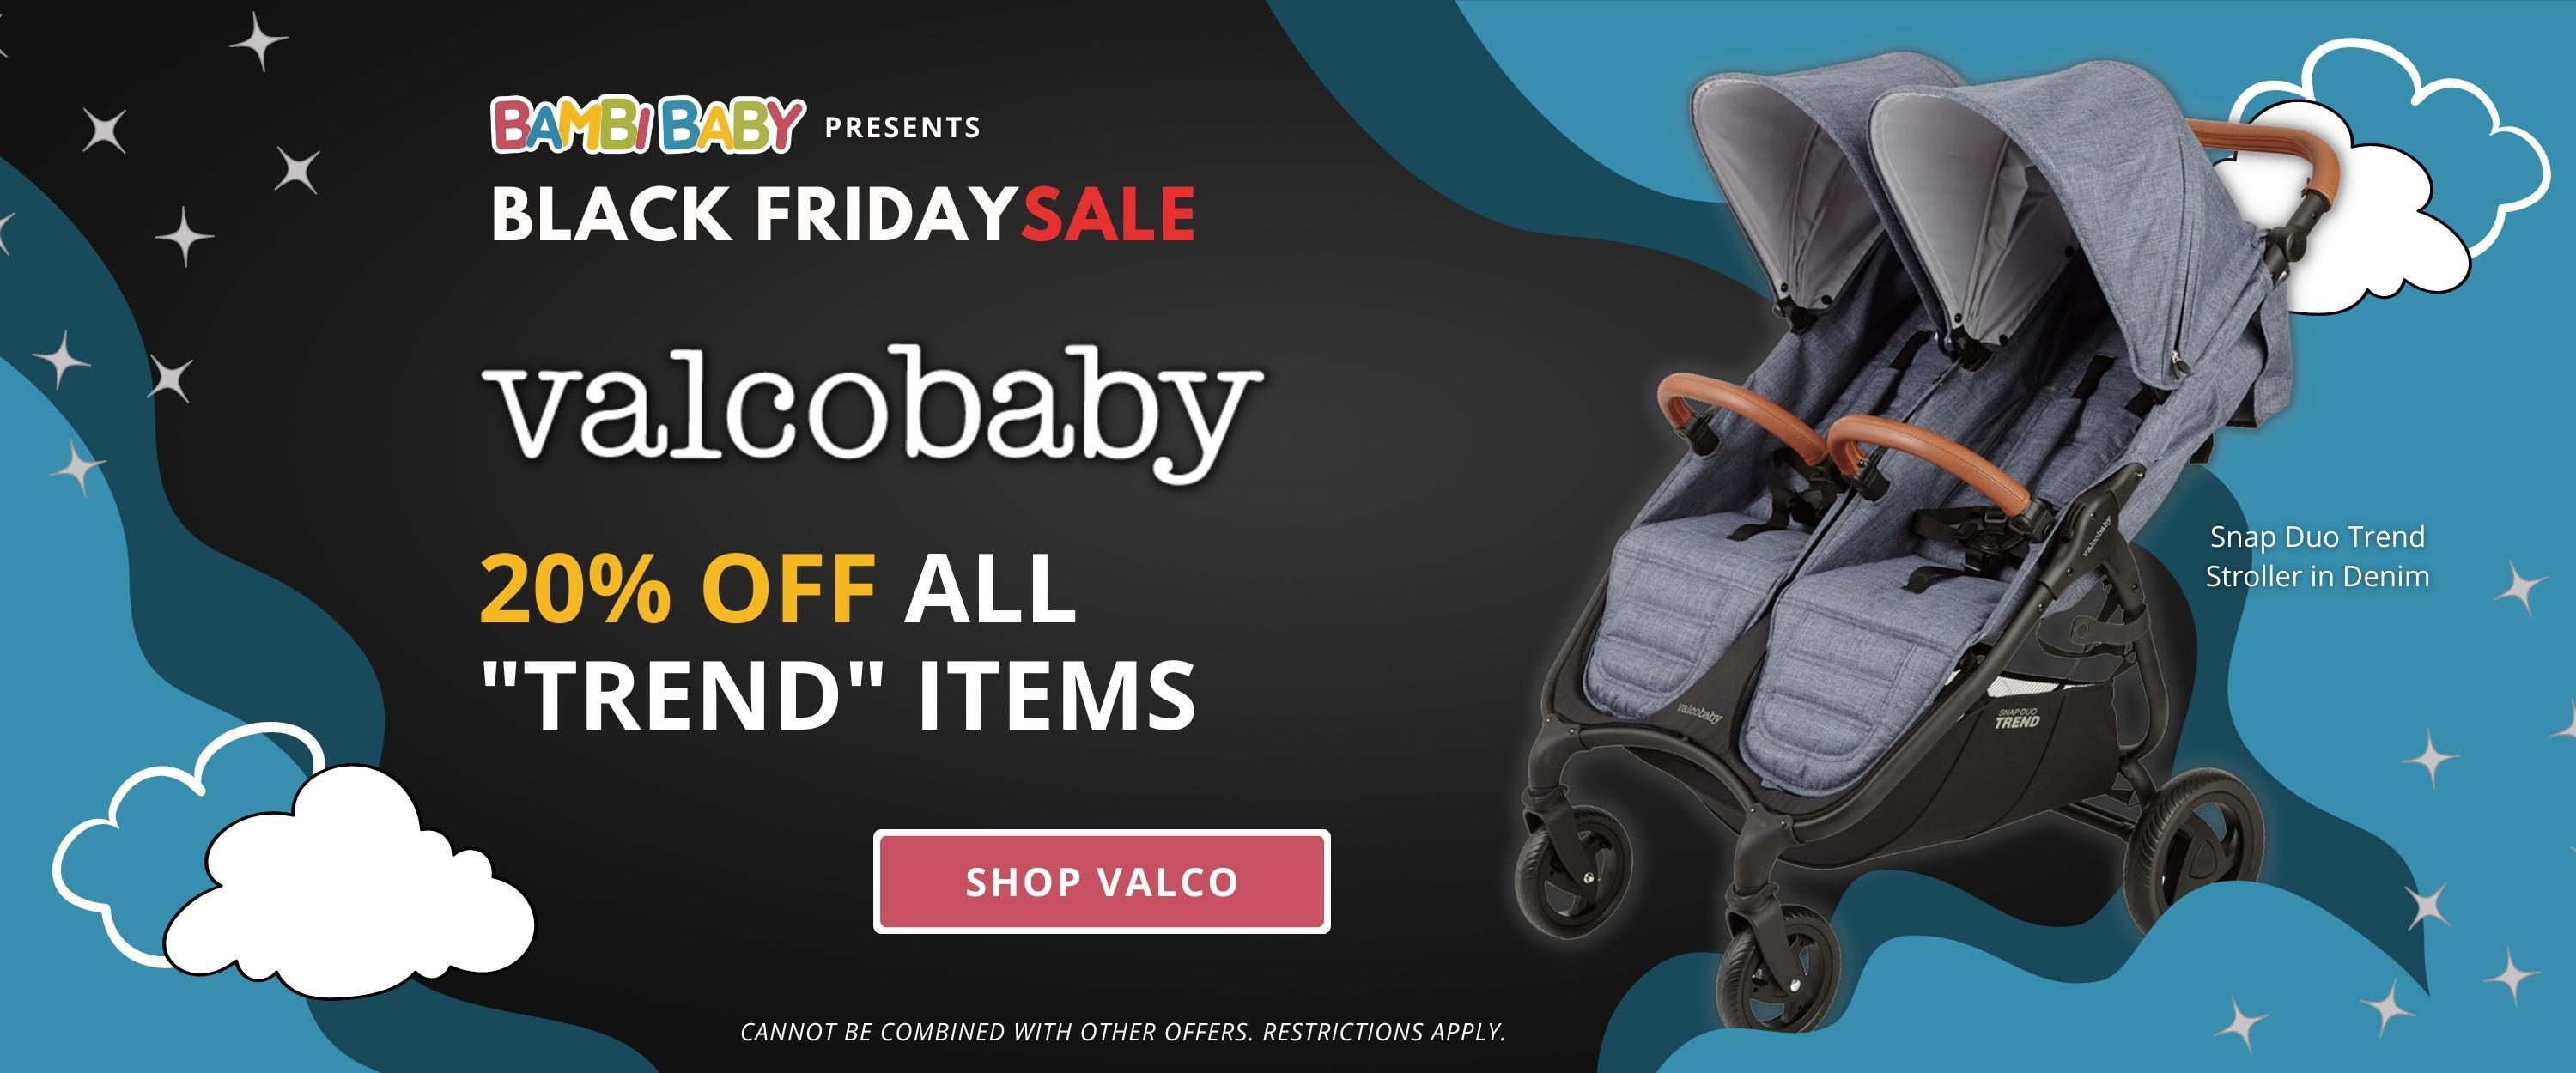 valcobaby black friday sale